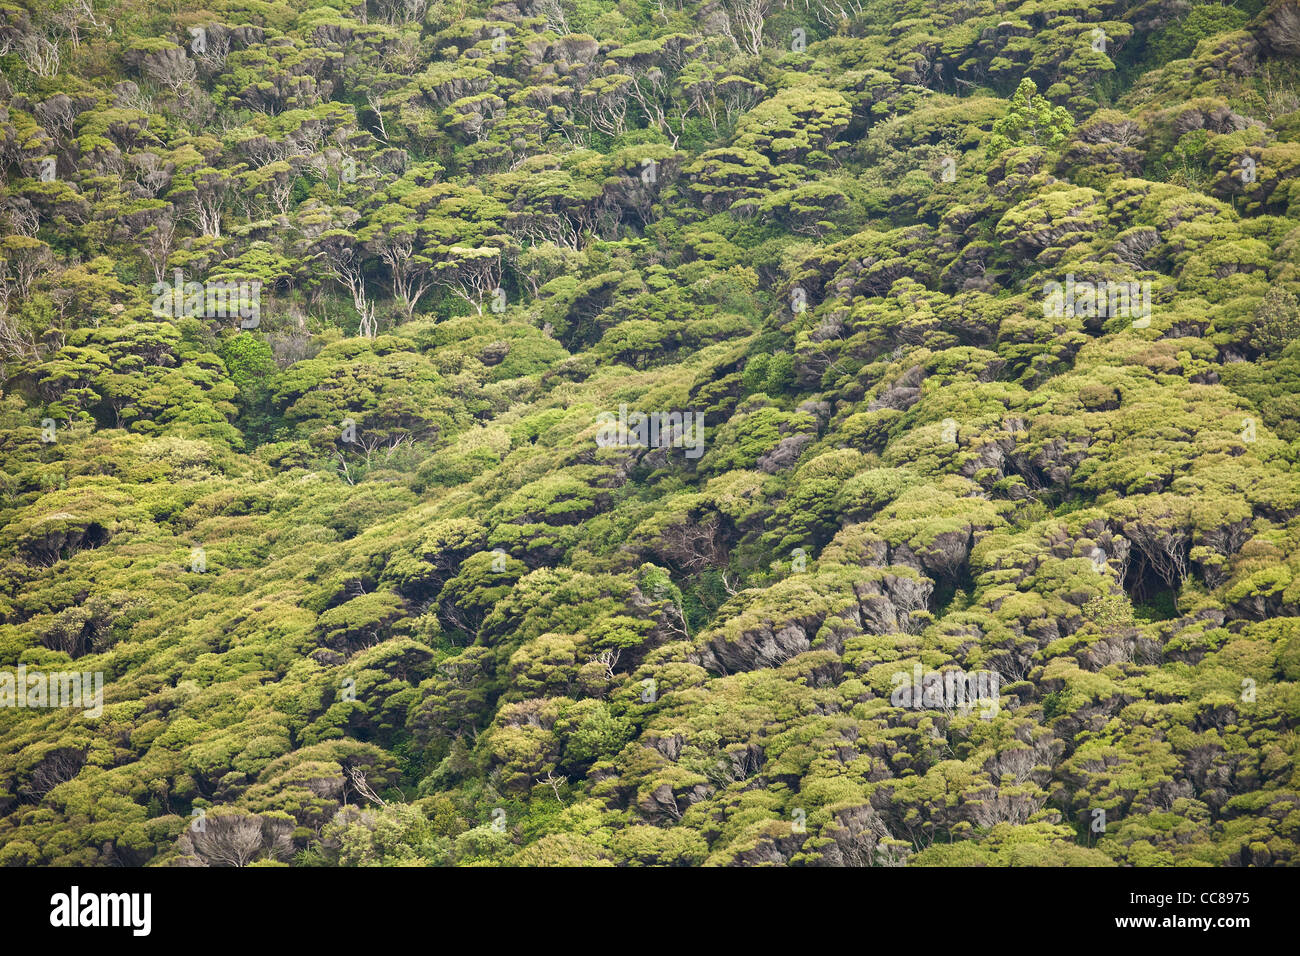 Collina di foreste native in Nuova Zelanda Waitakere varia parco nazionale di Auckland North Island kauri beach pohutakawa tea tree Foto Stock